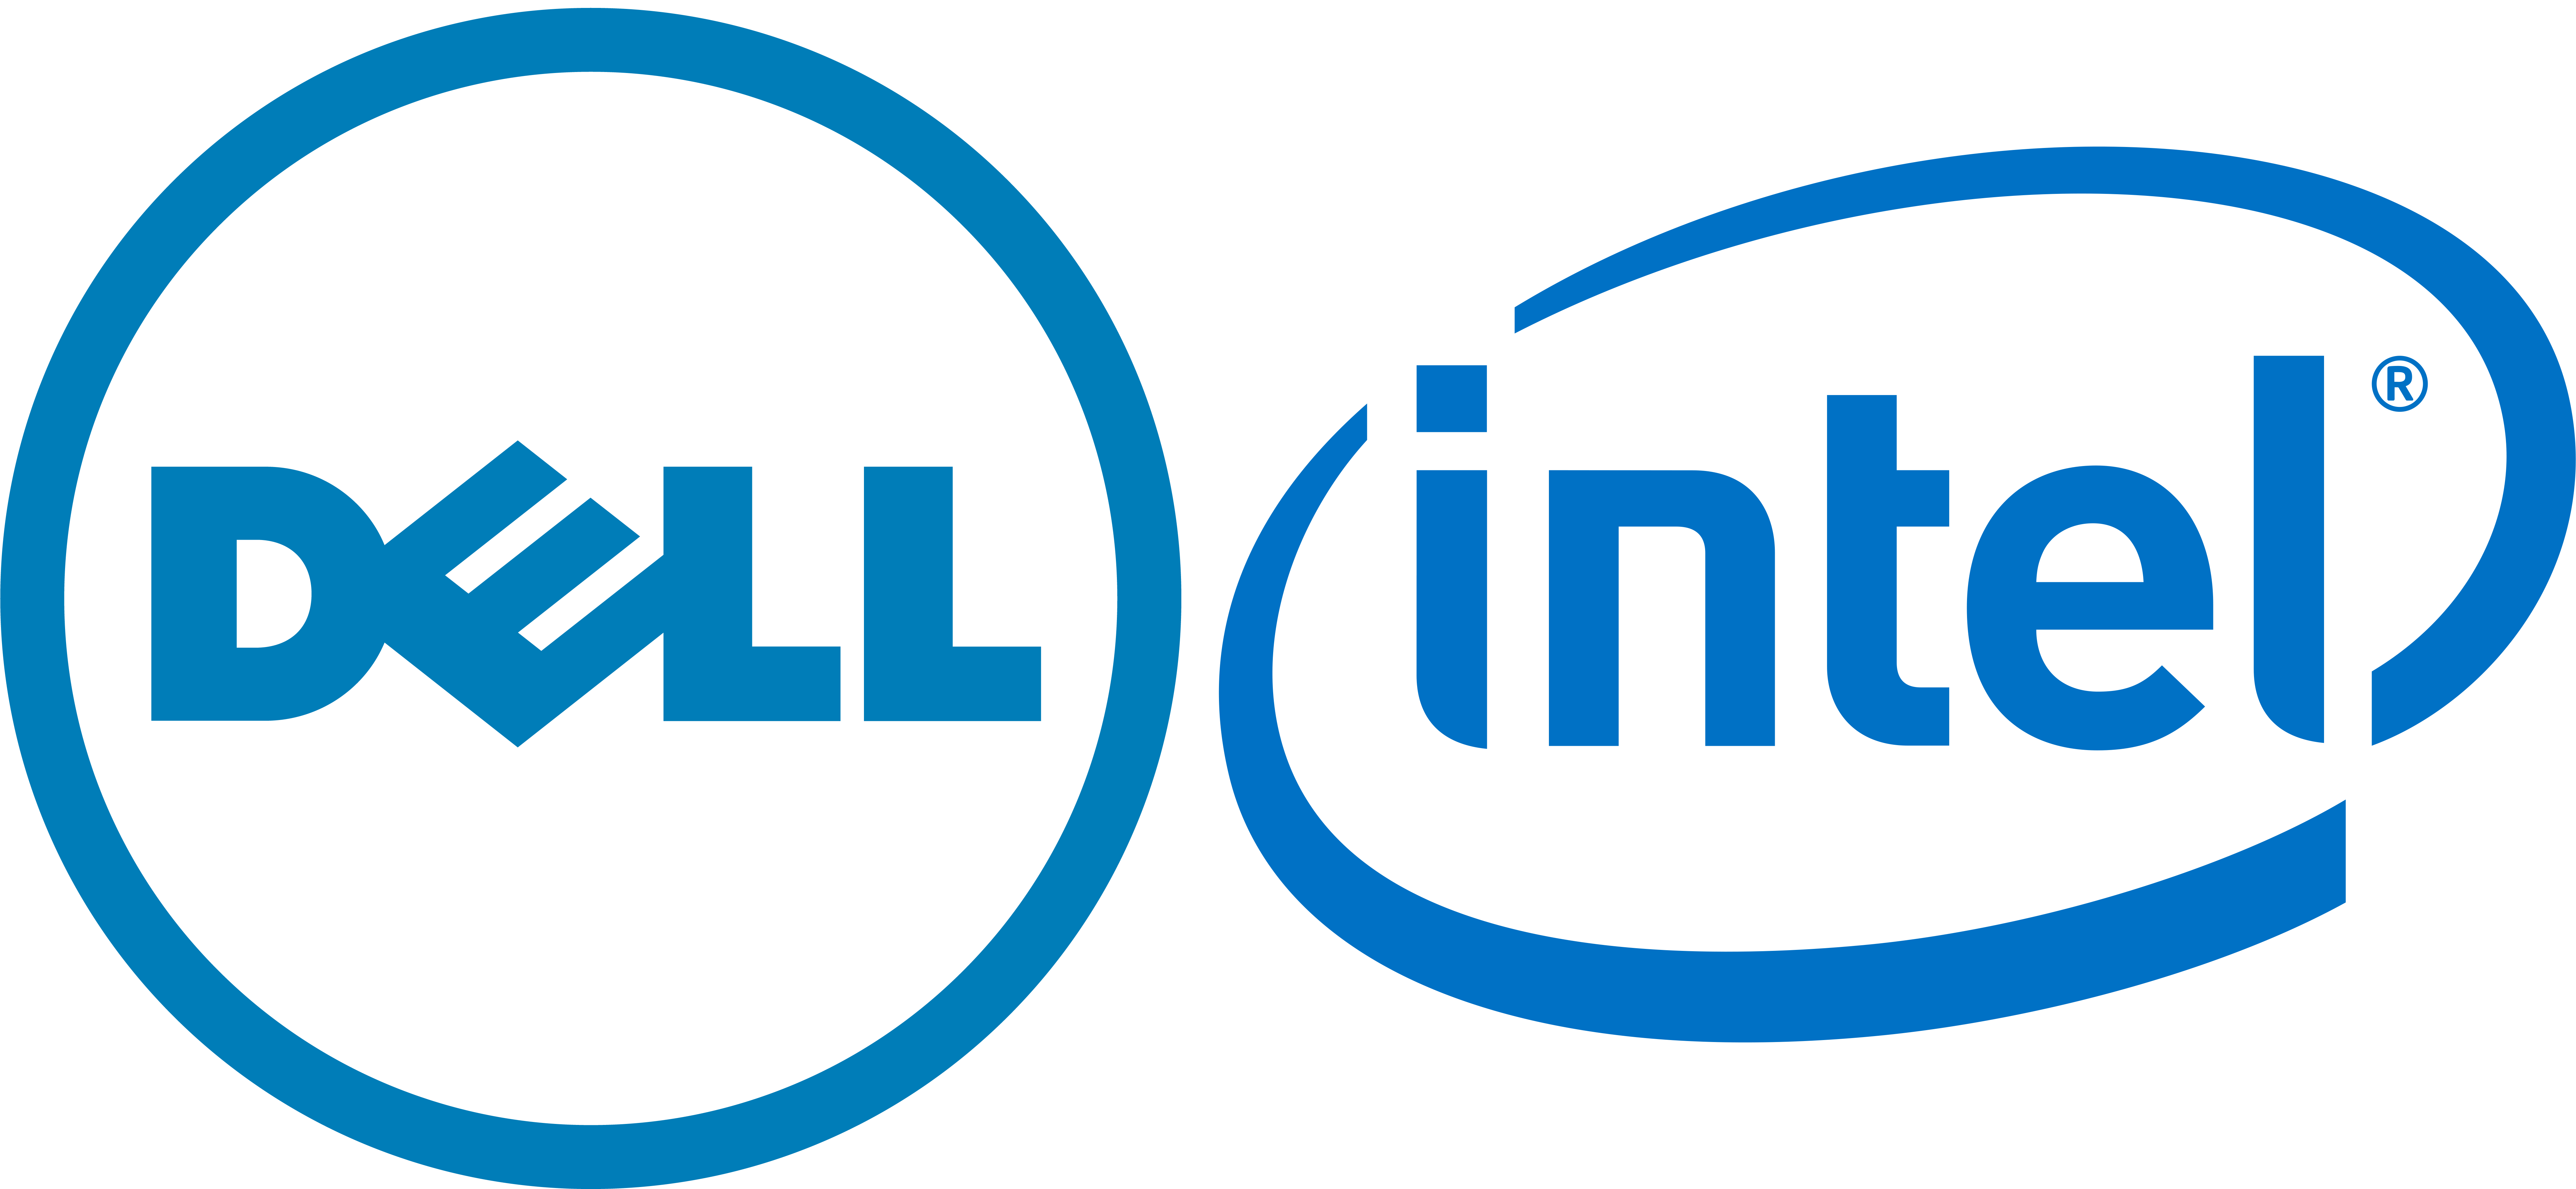 Логотип Intel. Логотип компании in. Надпись Интел. Логотип интела.